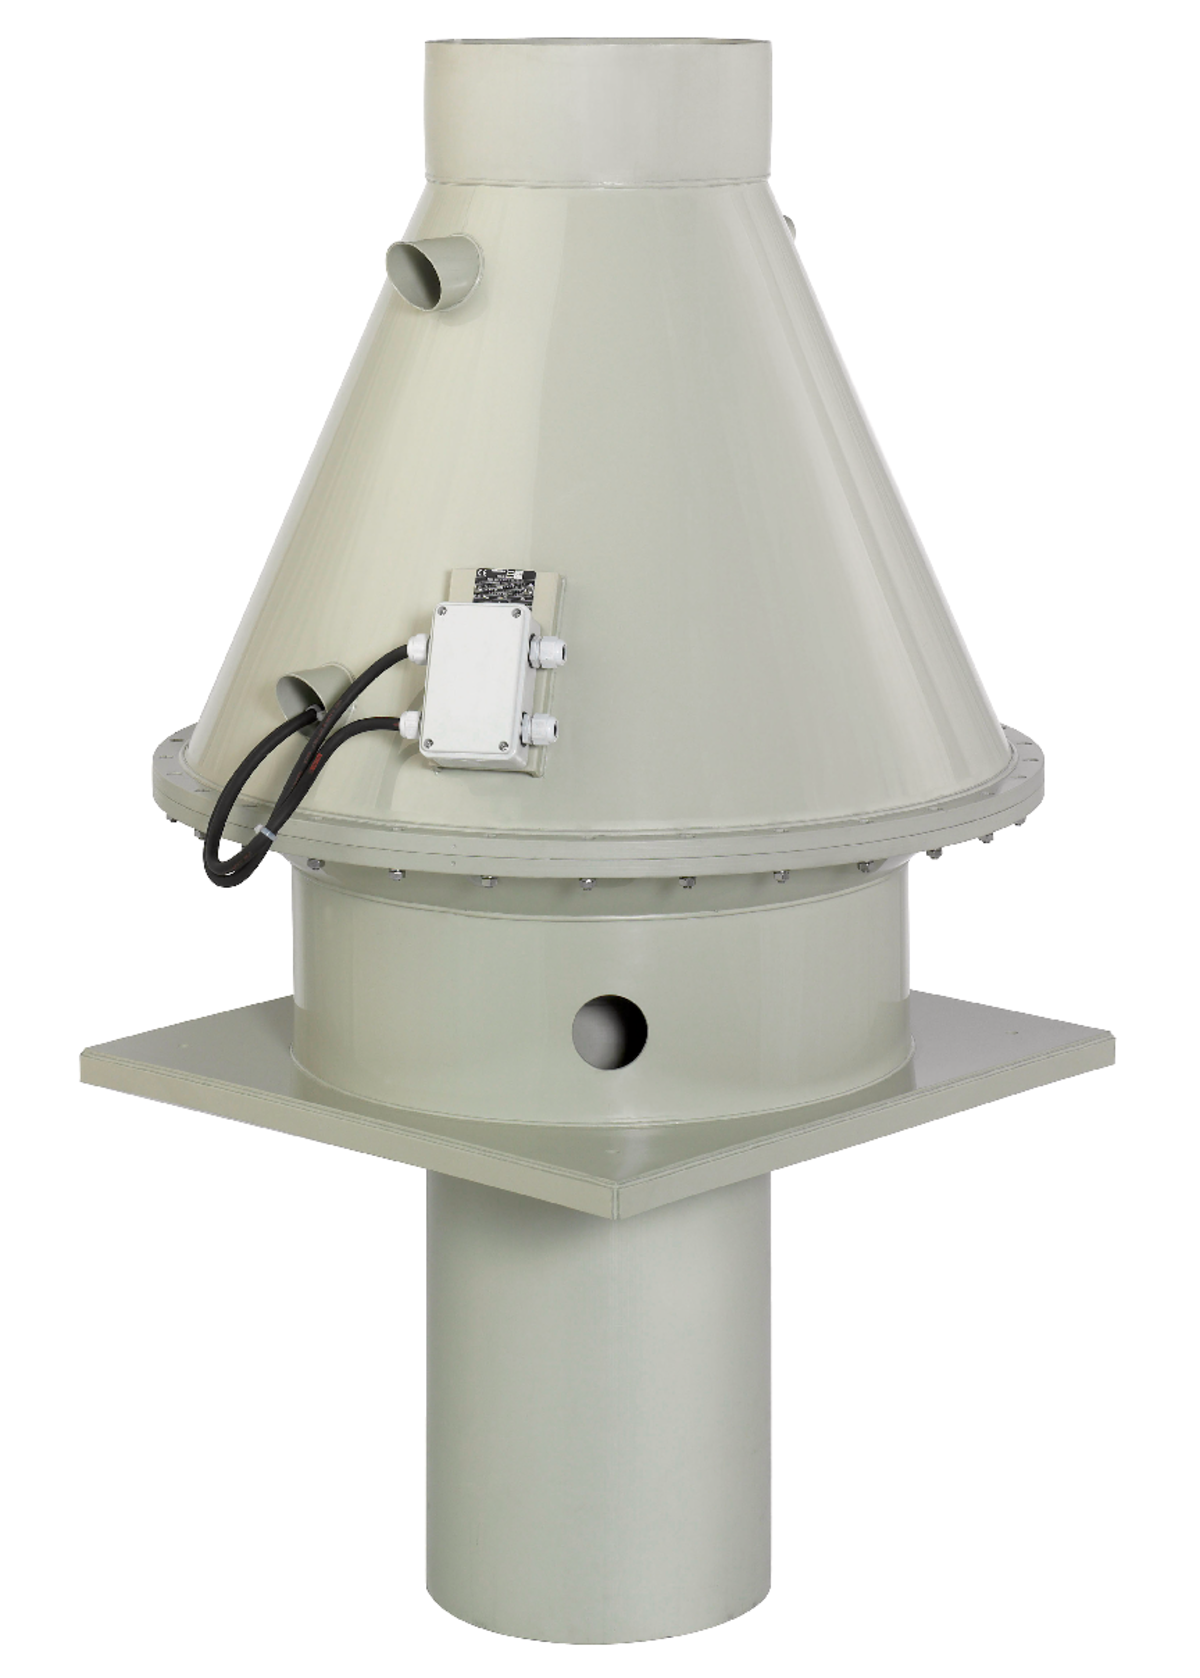 DVP - Dak ventilatoren - Ventilatoren & Accessoires - Producten - Systemair